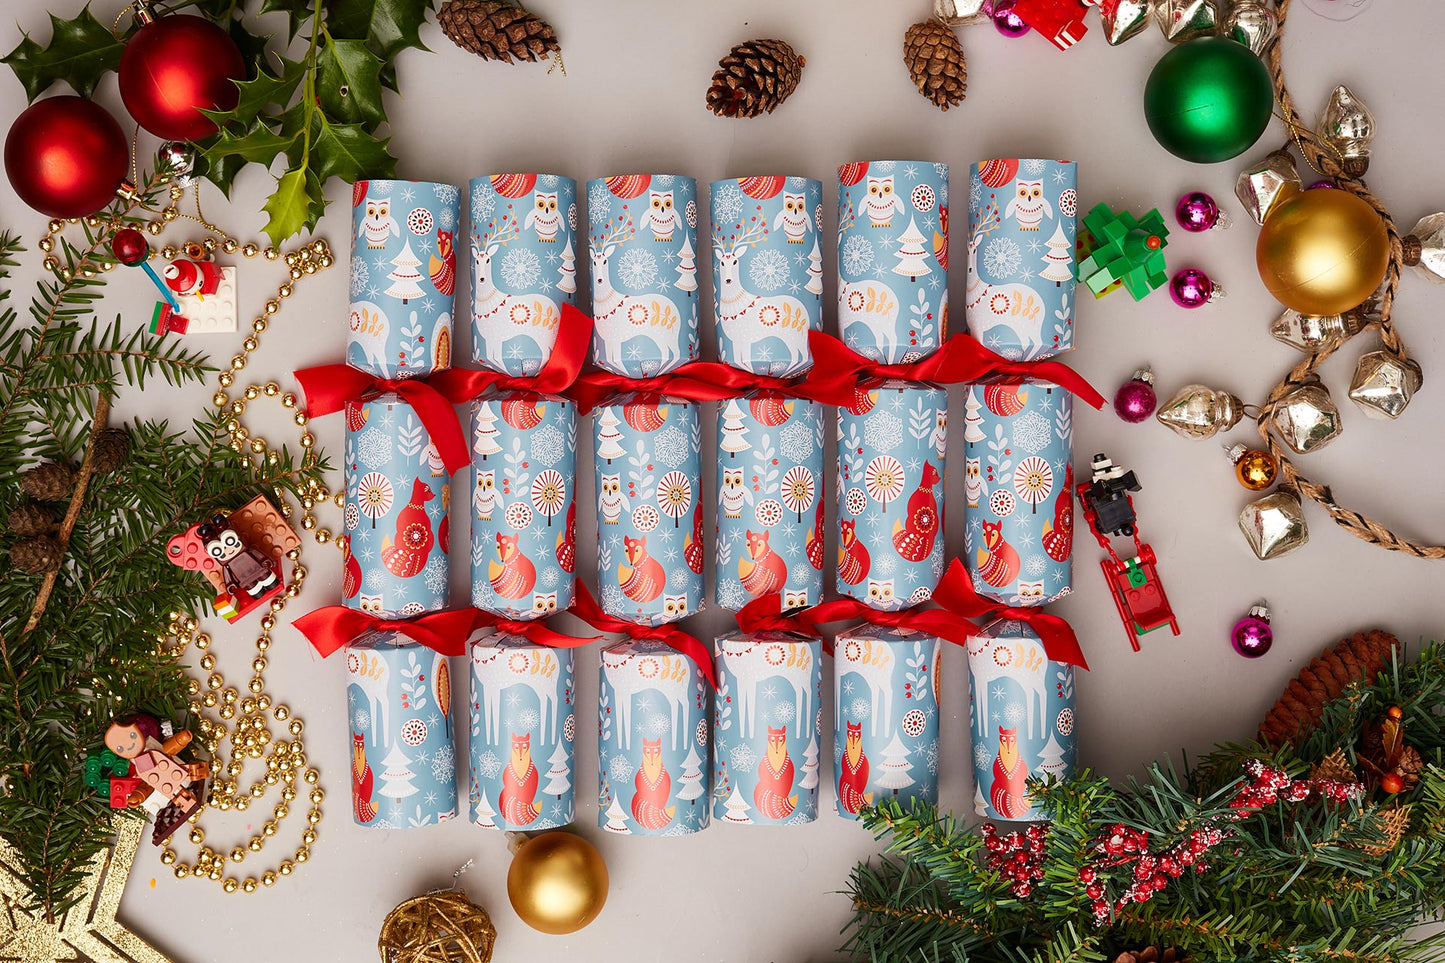 Santa's Friends Building Block Christmas Crackers (6 x 12-inch Crackers)